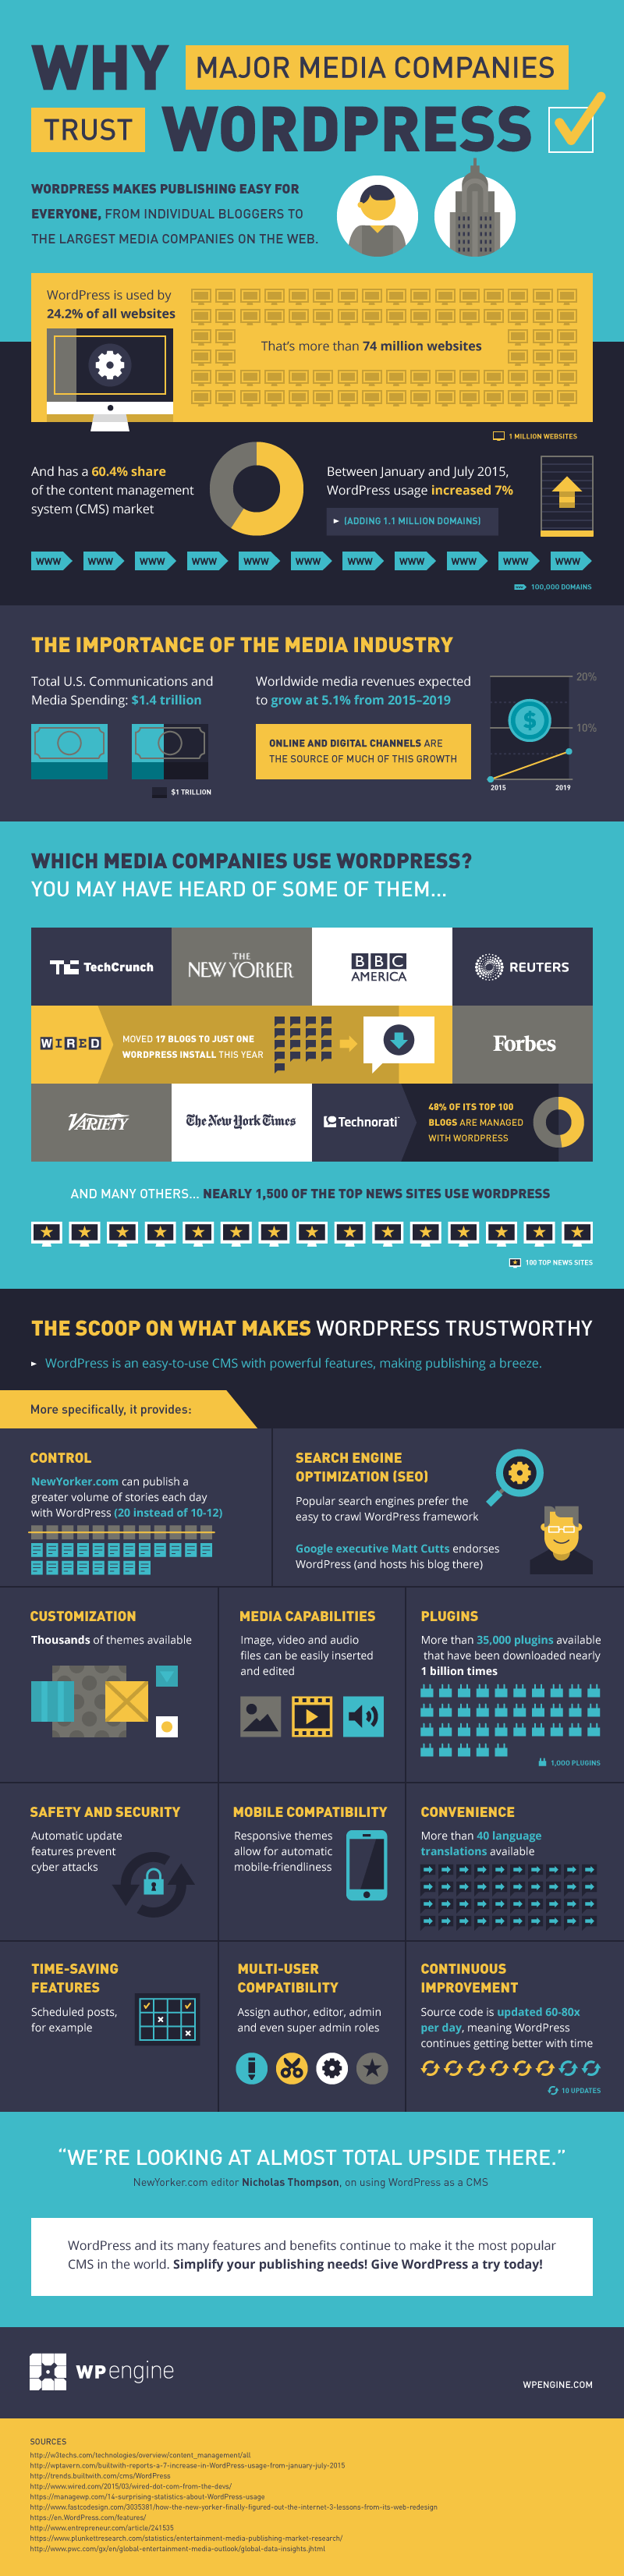 Why Major Media Companies Trust WordPress - #Infographic